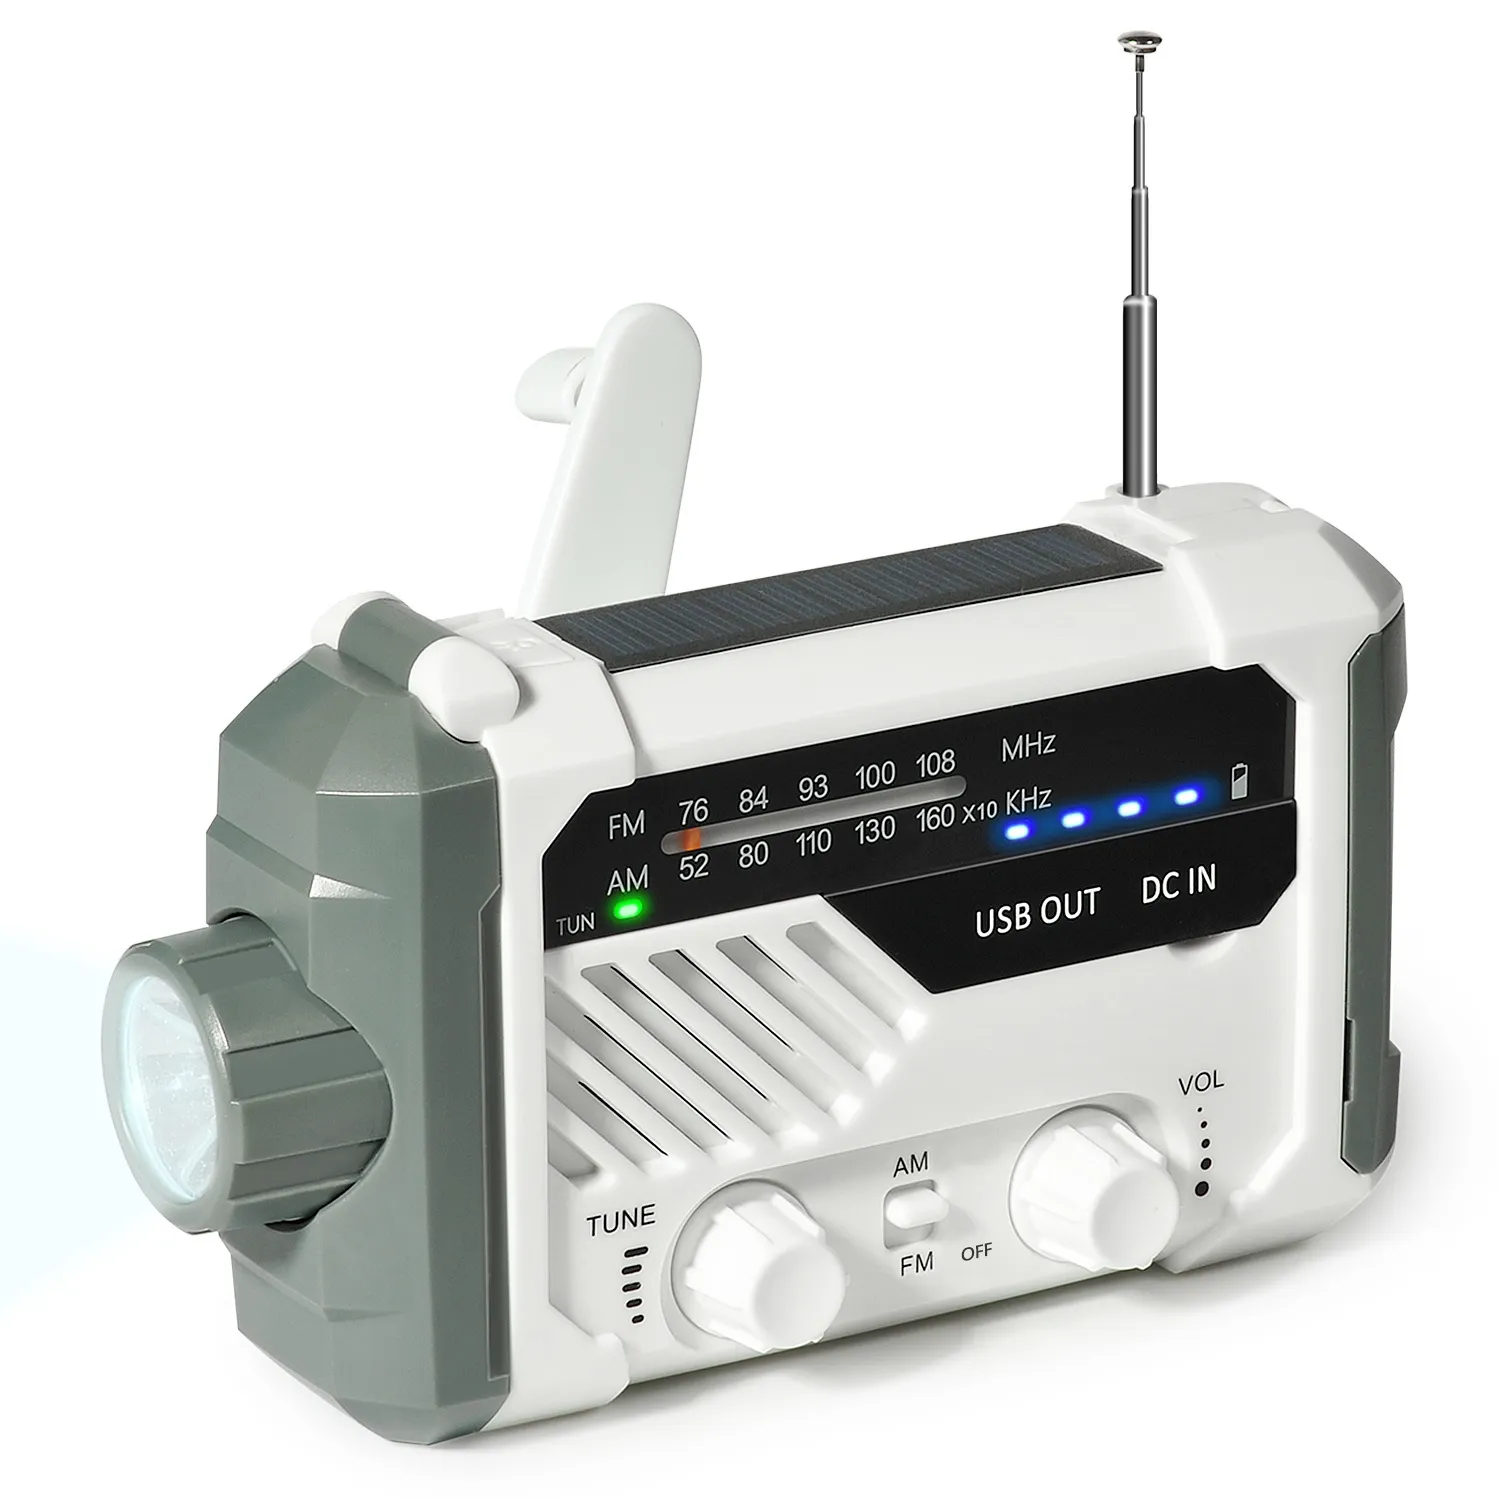 Radio Emergency Am FM NOAA Radio Hand Crank Battery Operated Solar Radio med LED Lamplamp Desk Lamp 2000mah Charger SOS Alert 221025